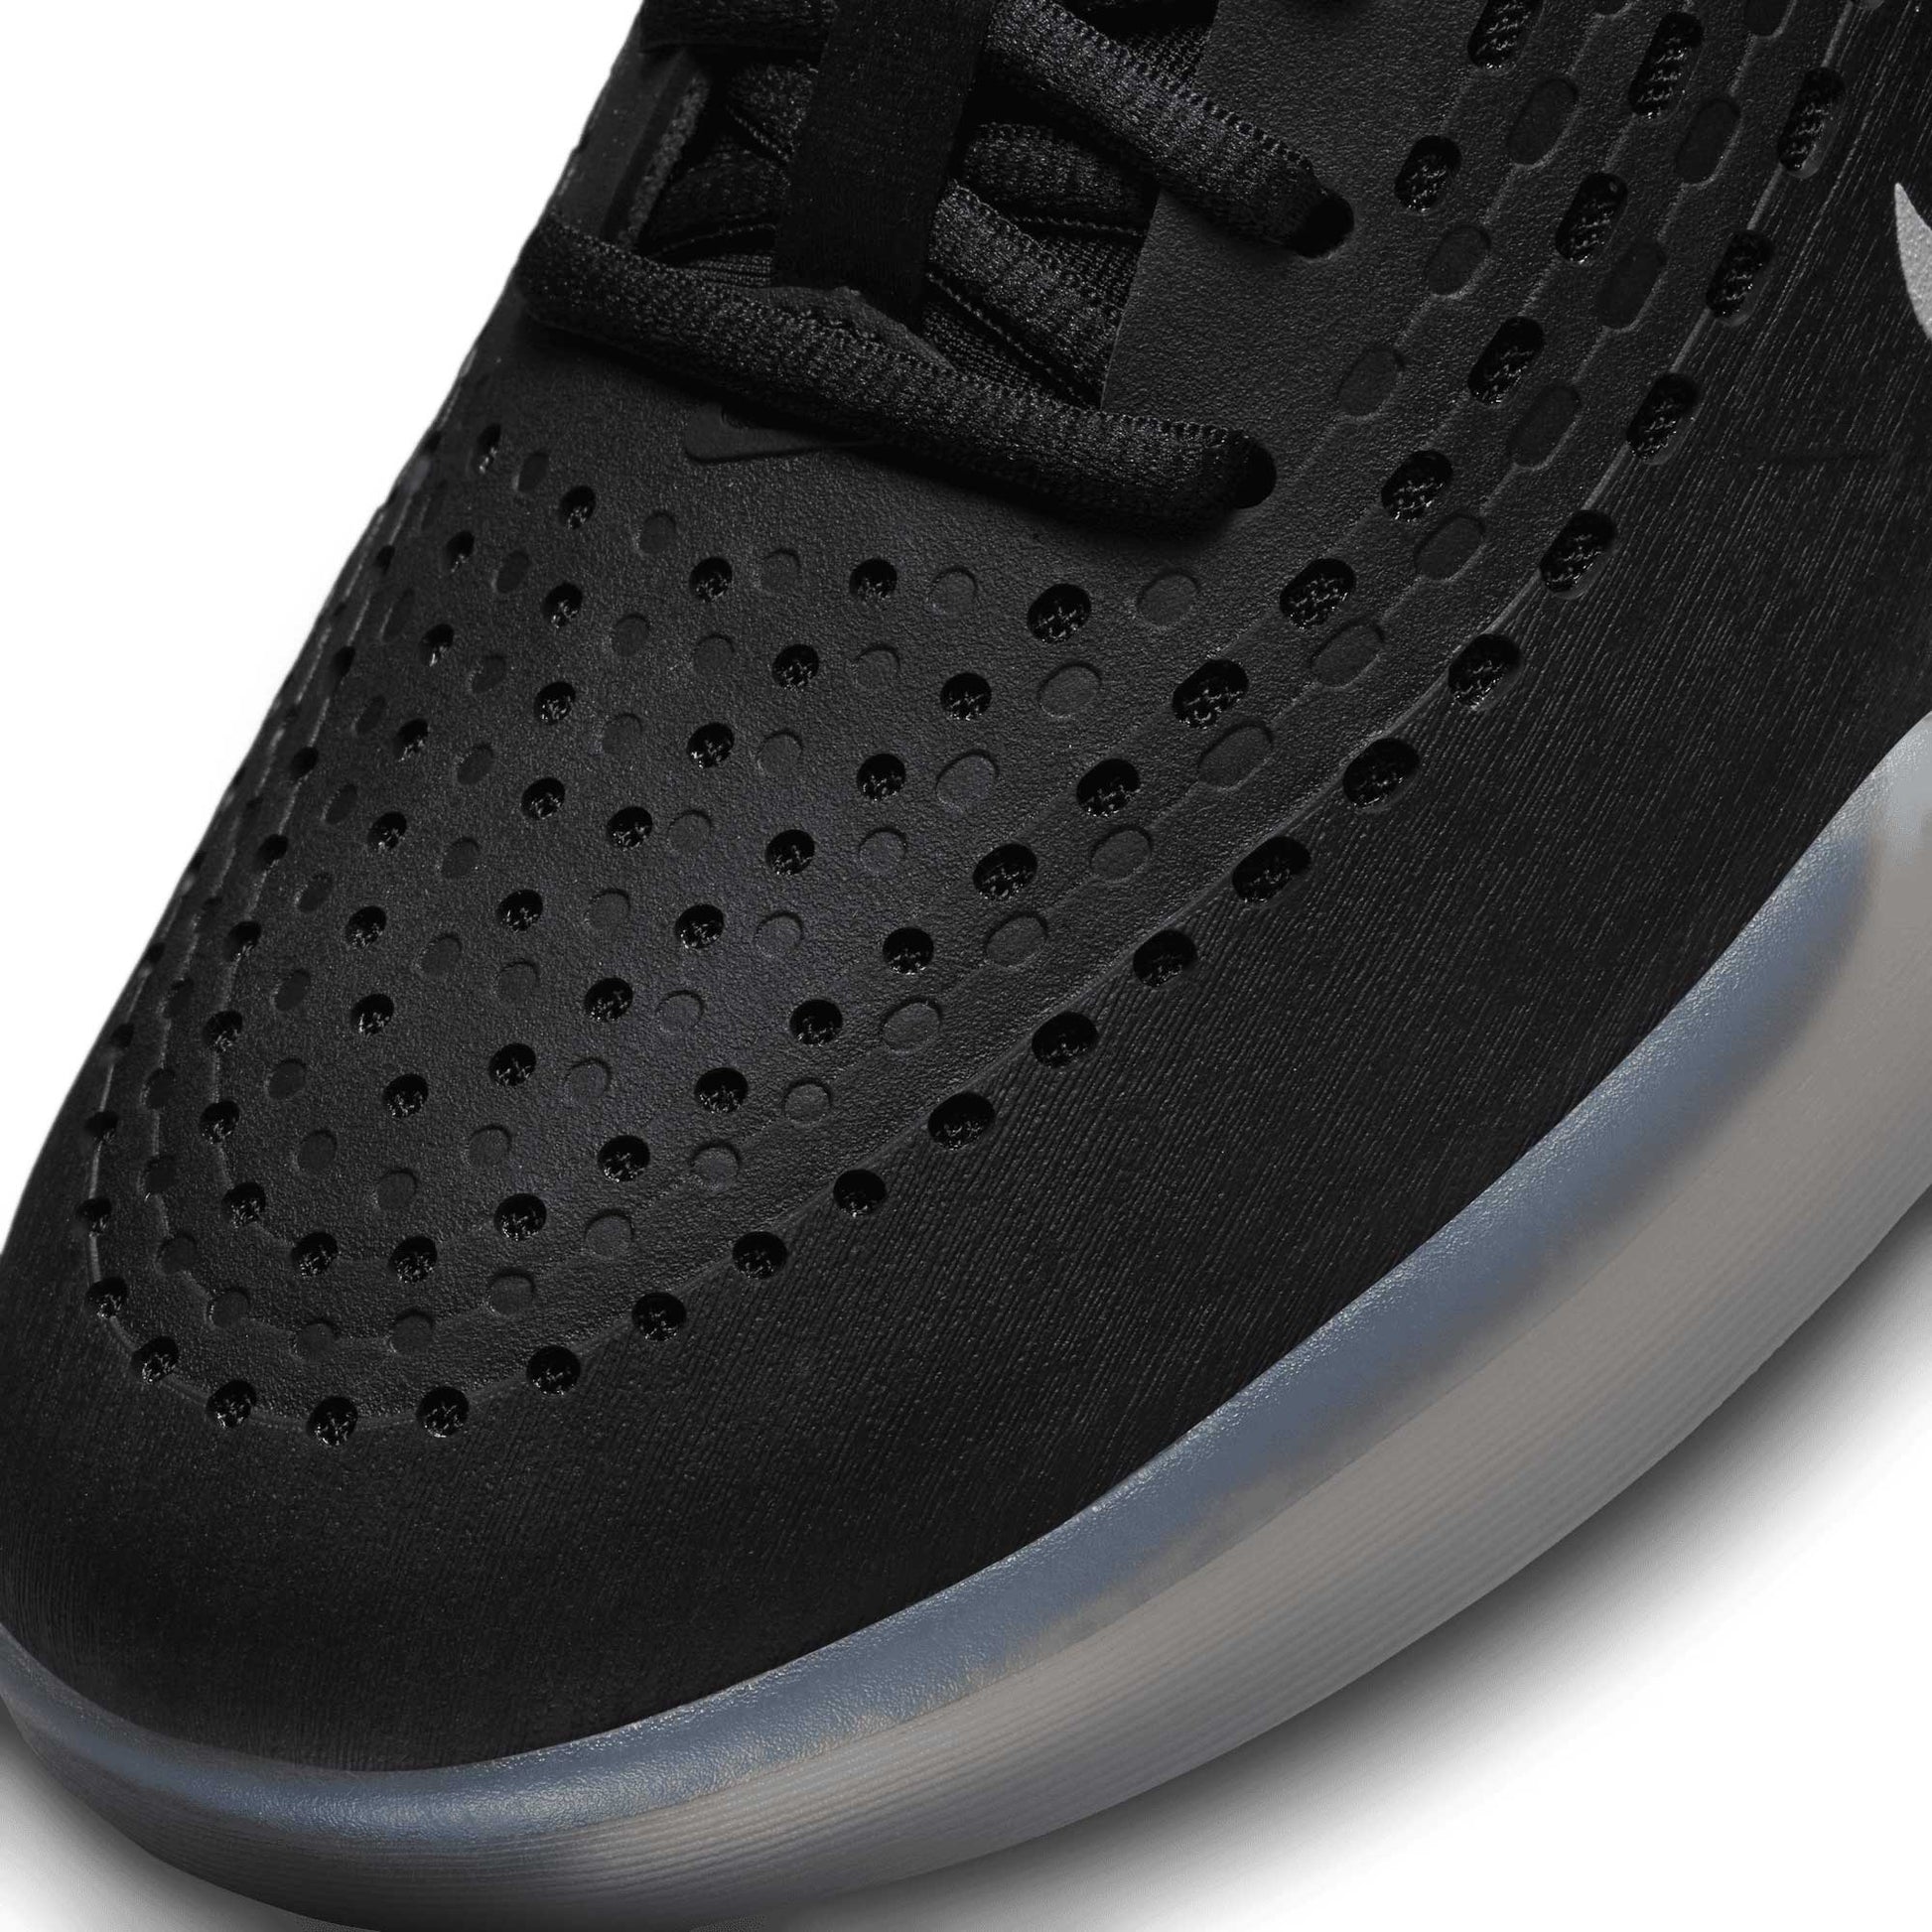 Nike SB Nyjah 3, black/white-black-summit white - Tiki Room Skateboards - 4